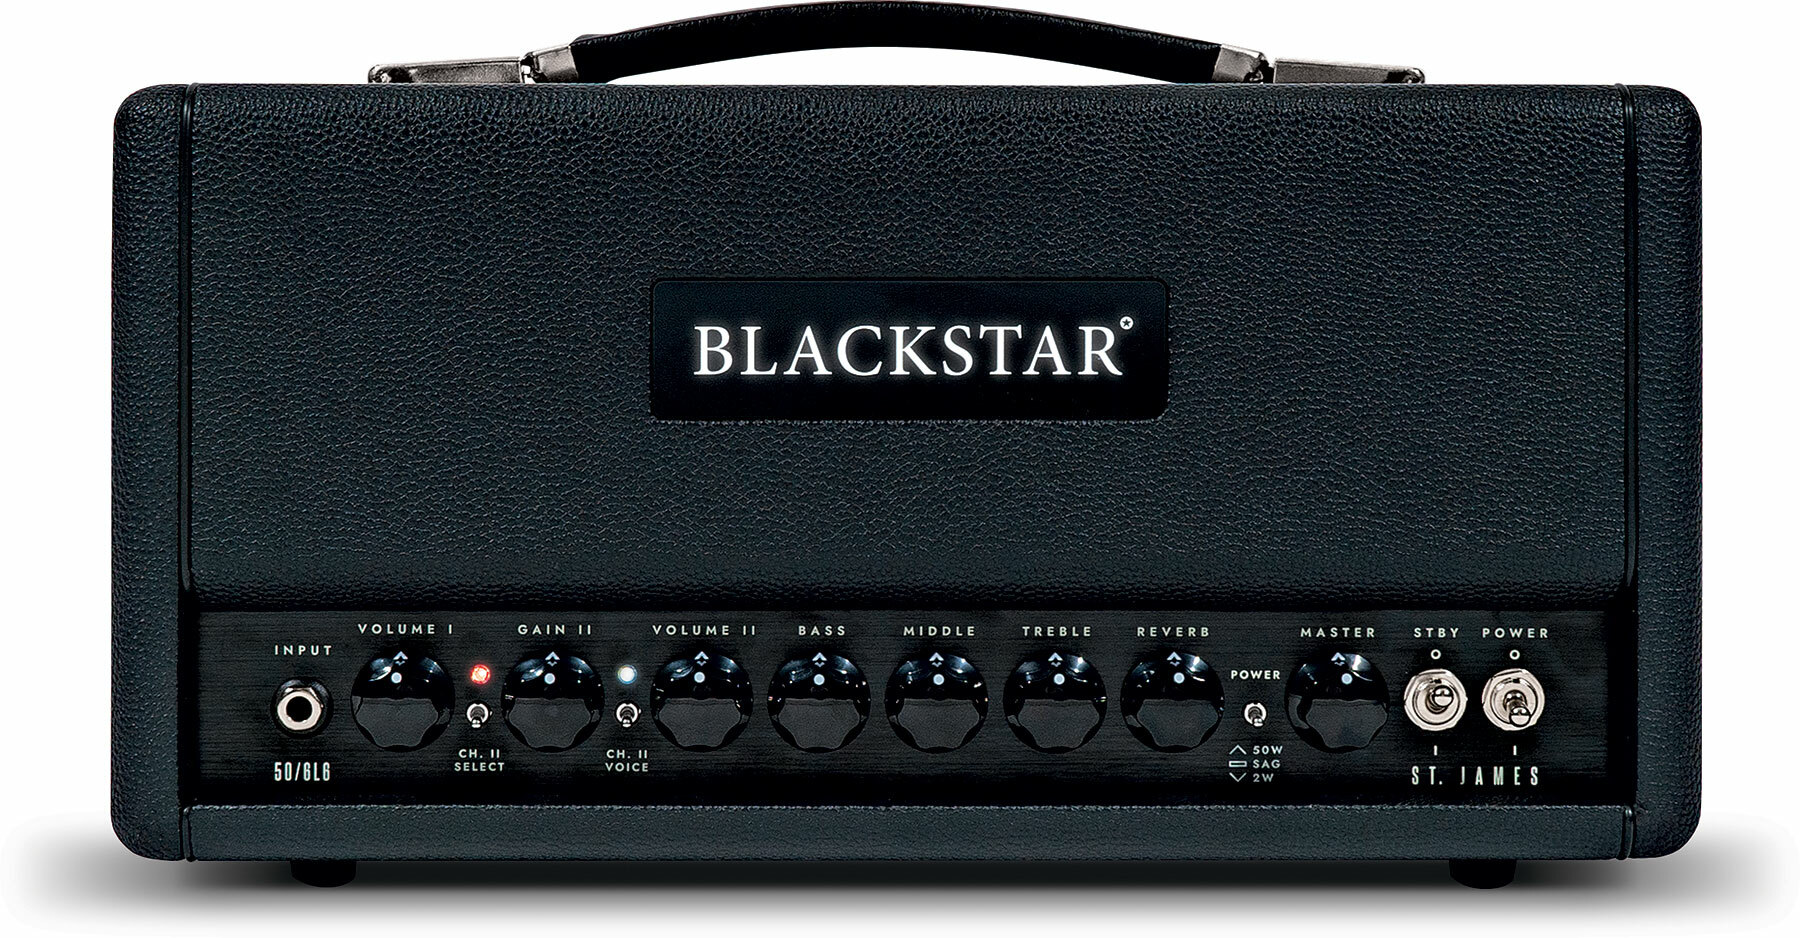 Blackstar St James 6l6h Head 50/5/2w Black - Electric guitar amp head - Main picture